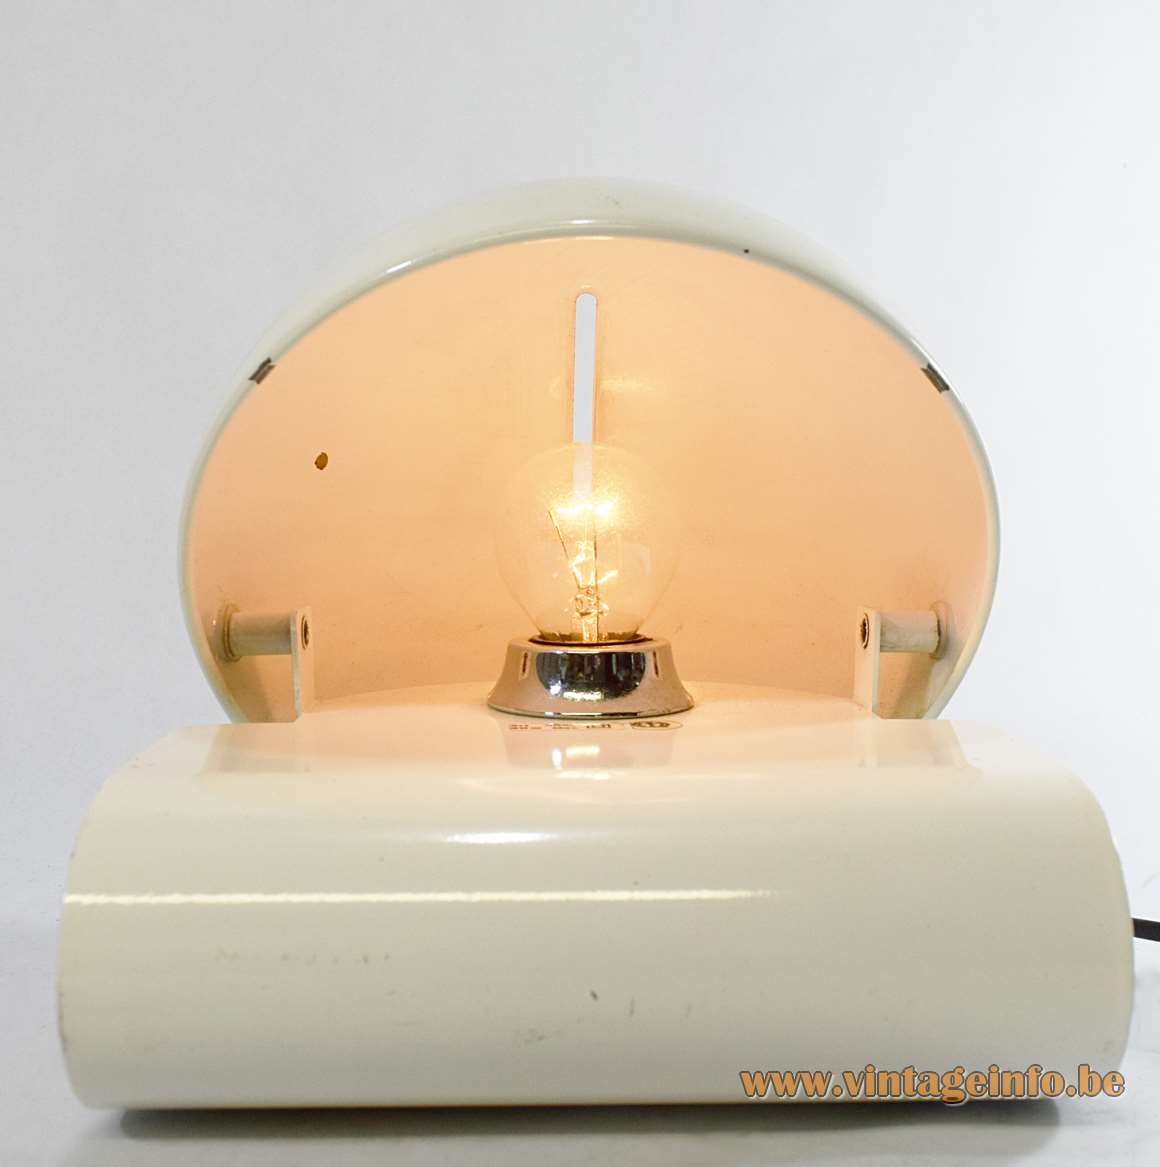 iGuzzini Bugia table or wall lamp 1975 design: Giuseppe Cormio white metal adjustable lampshade curved slat